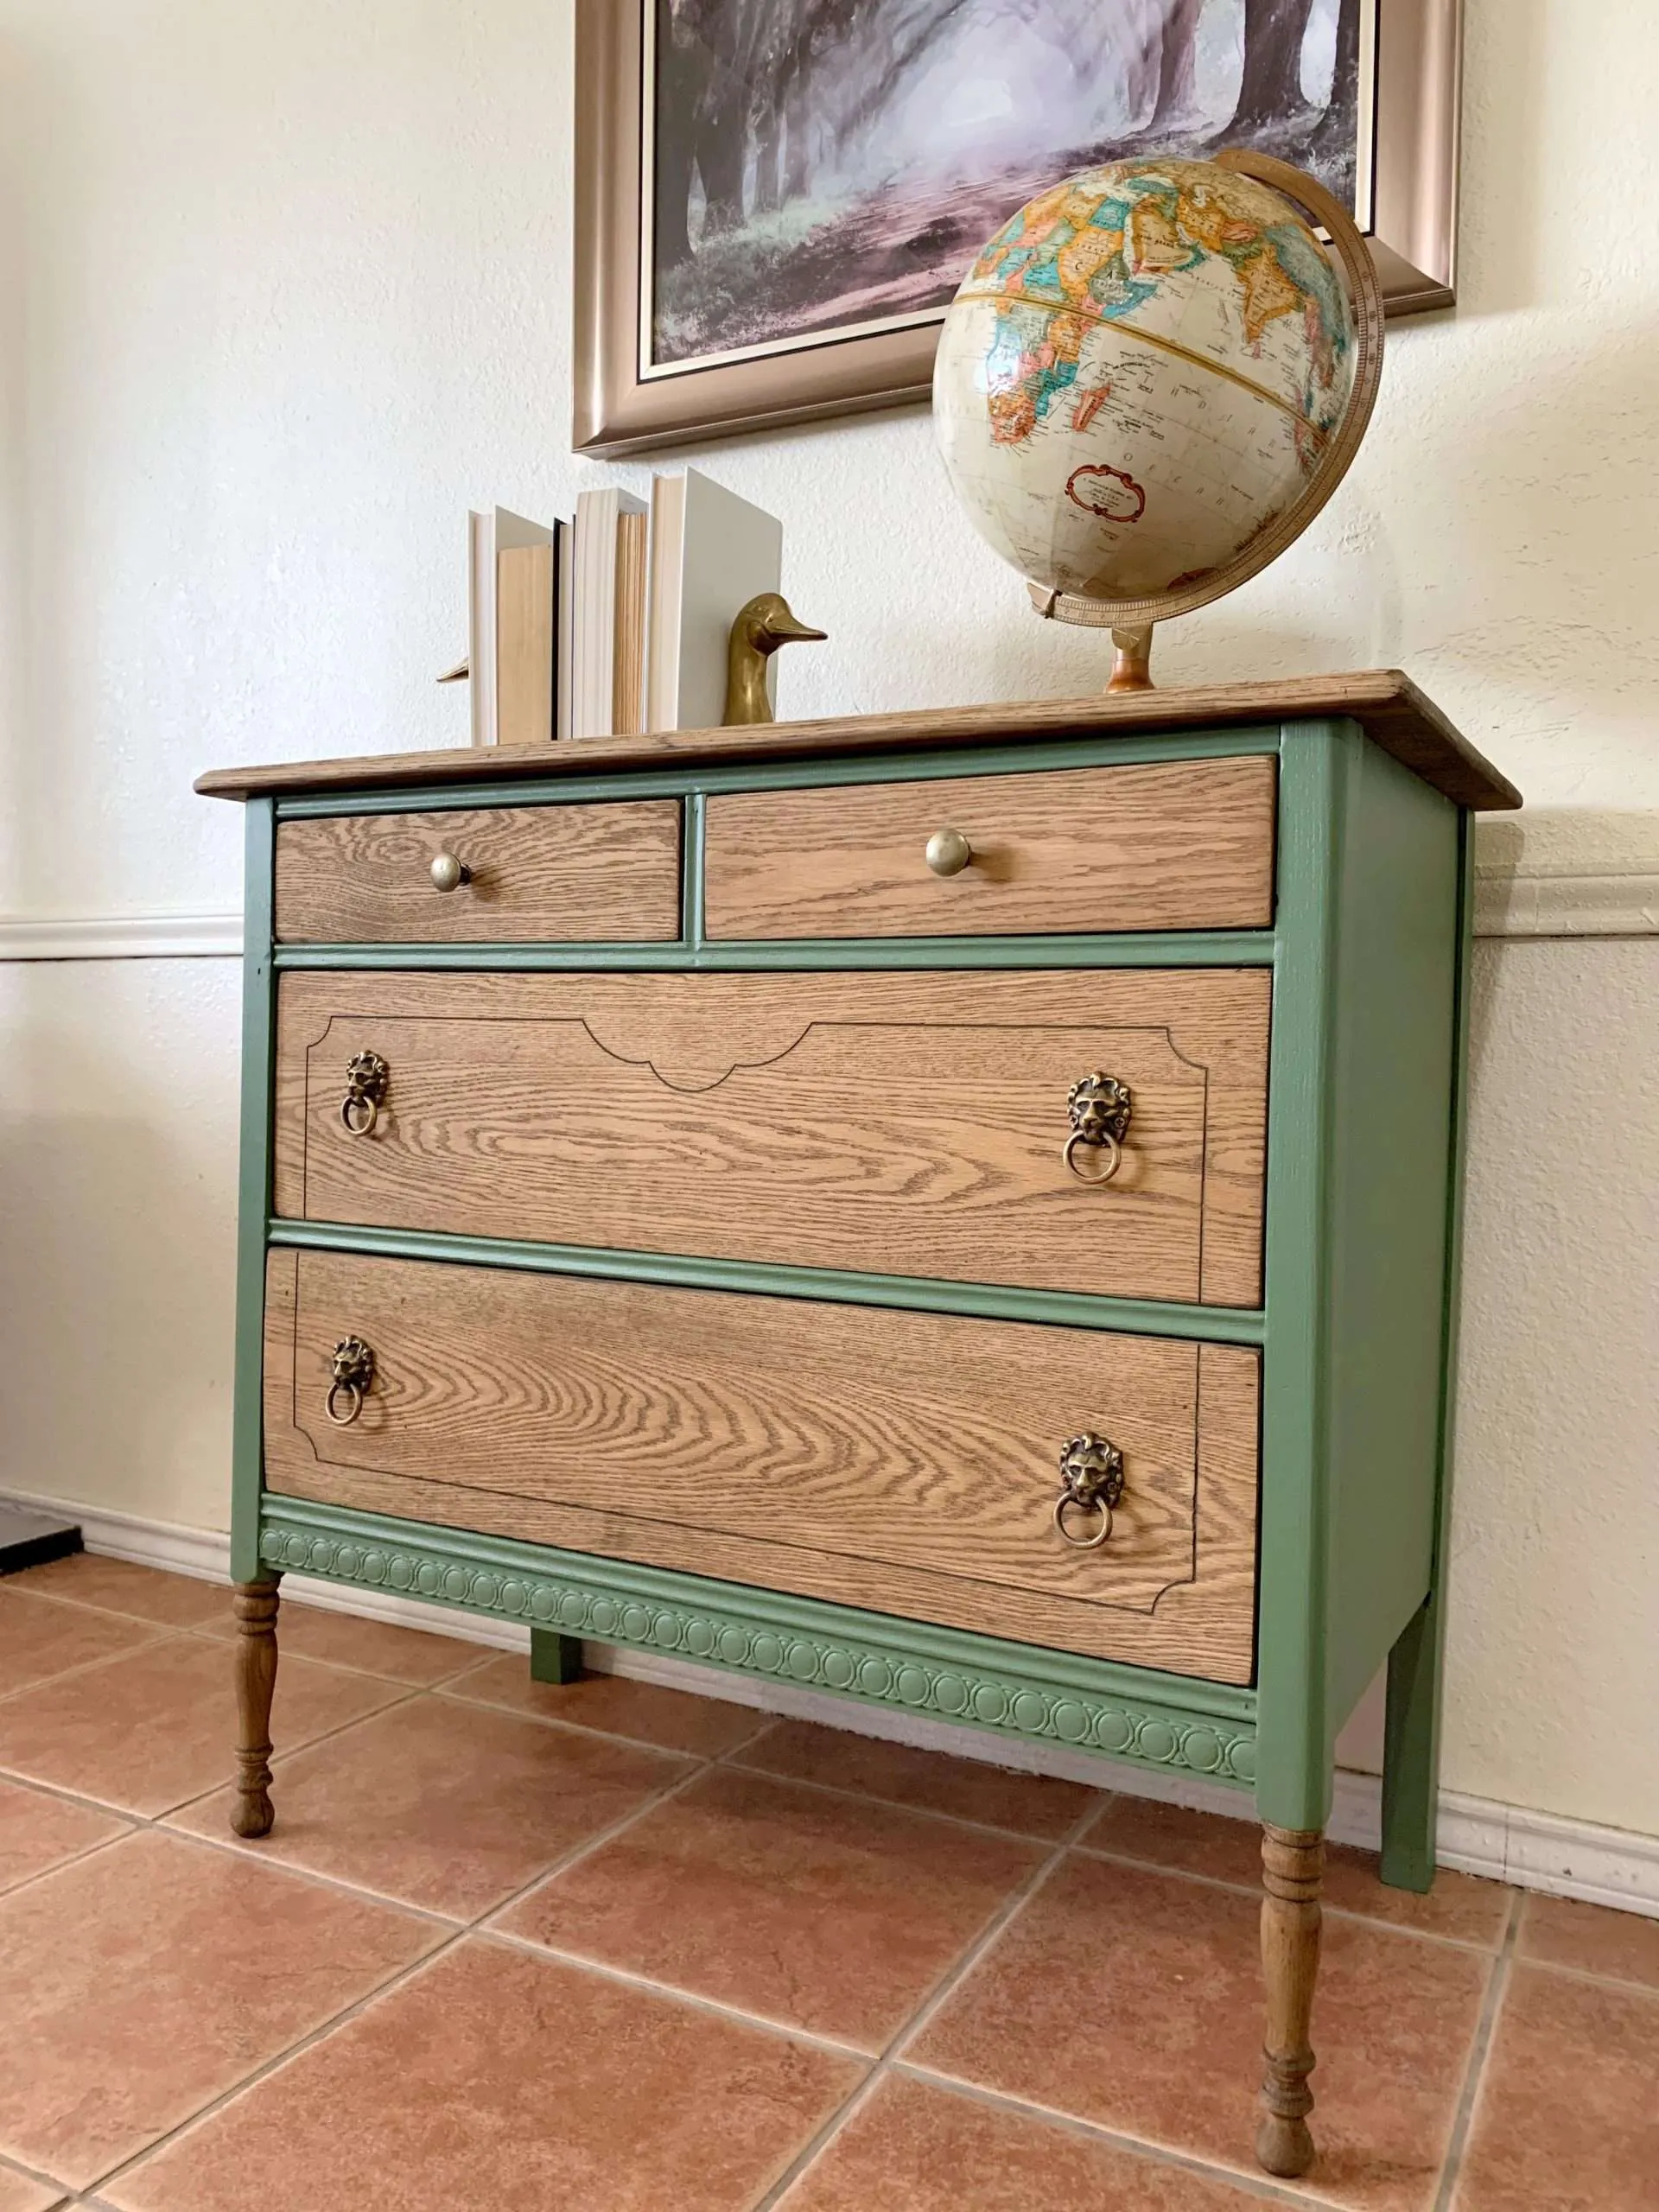 How to refurbish an antique dresser.